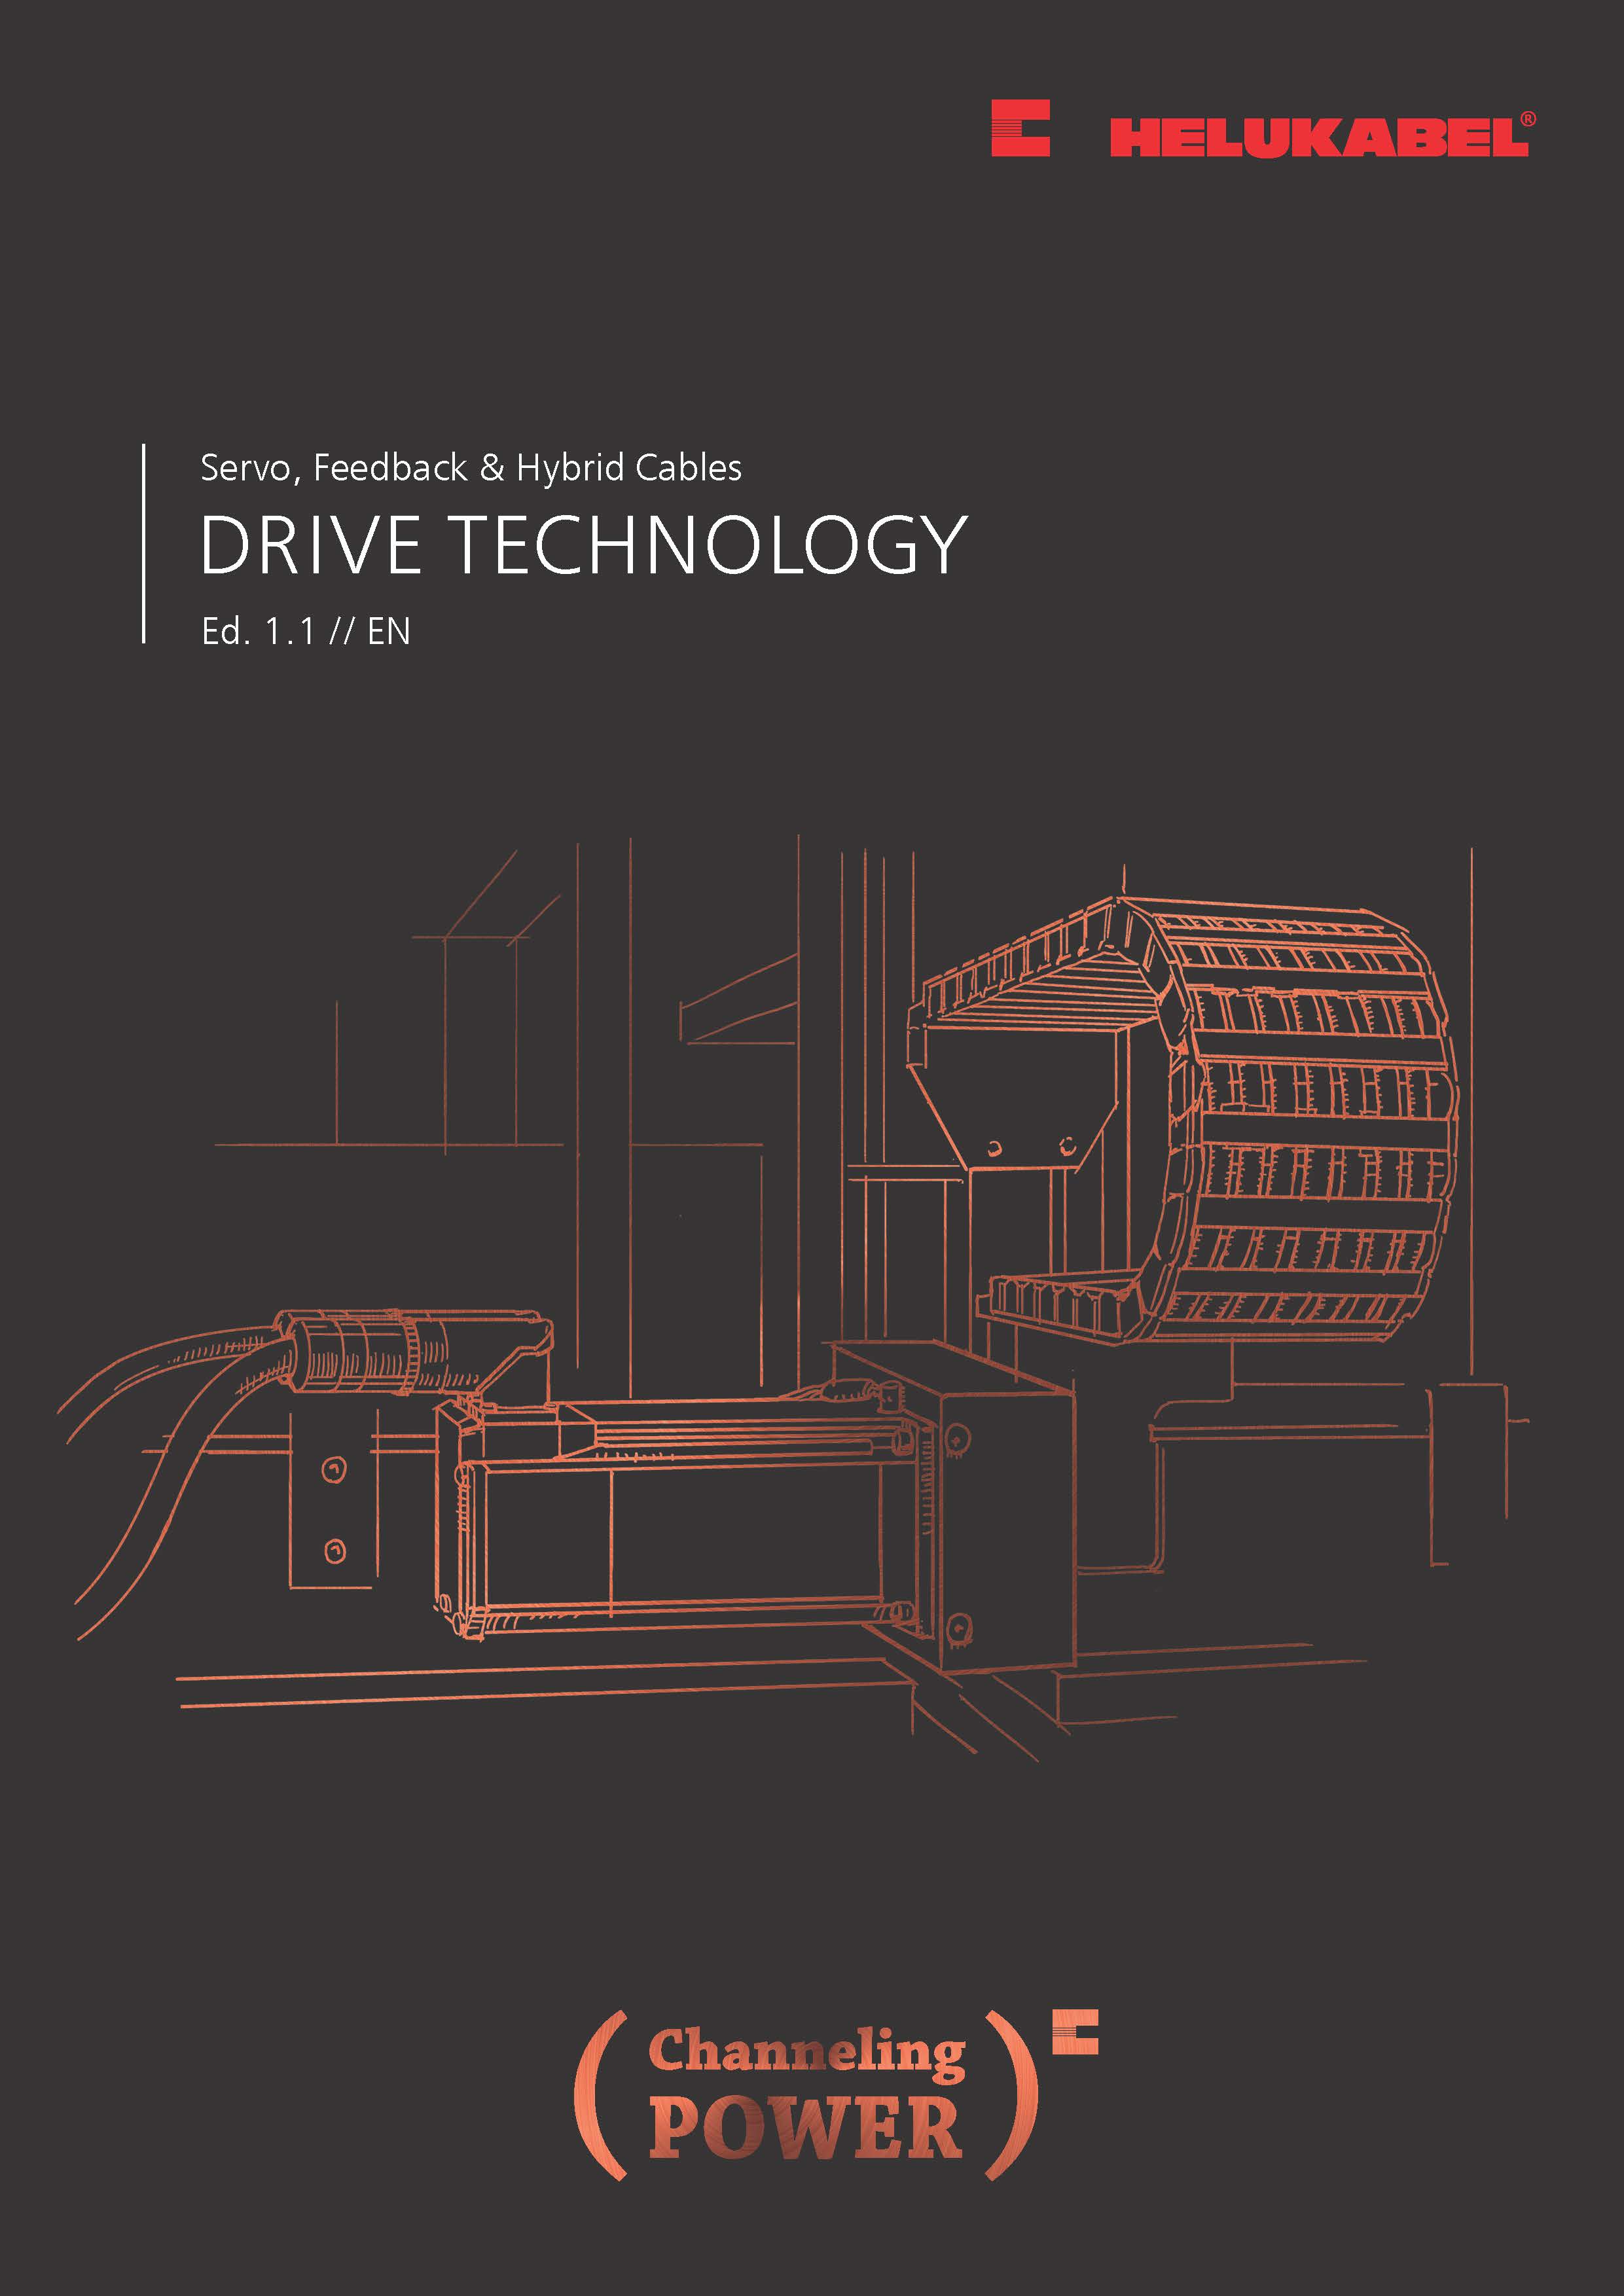 Drive Technology - Servo, Feedback & Hybrid Cables